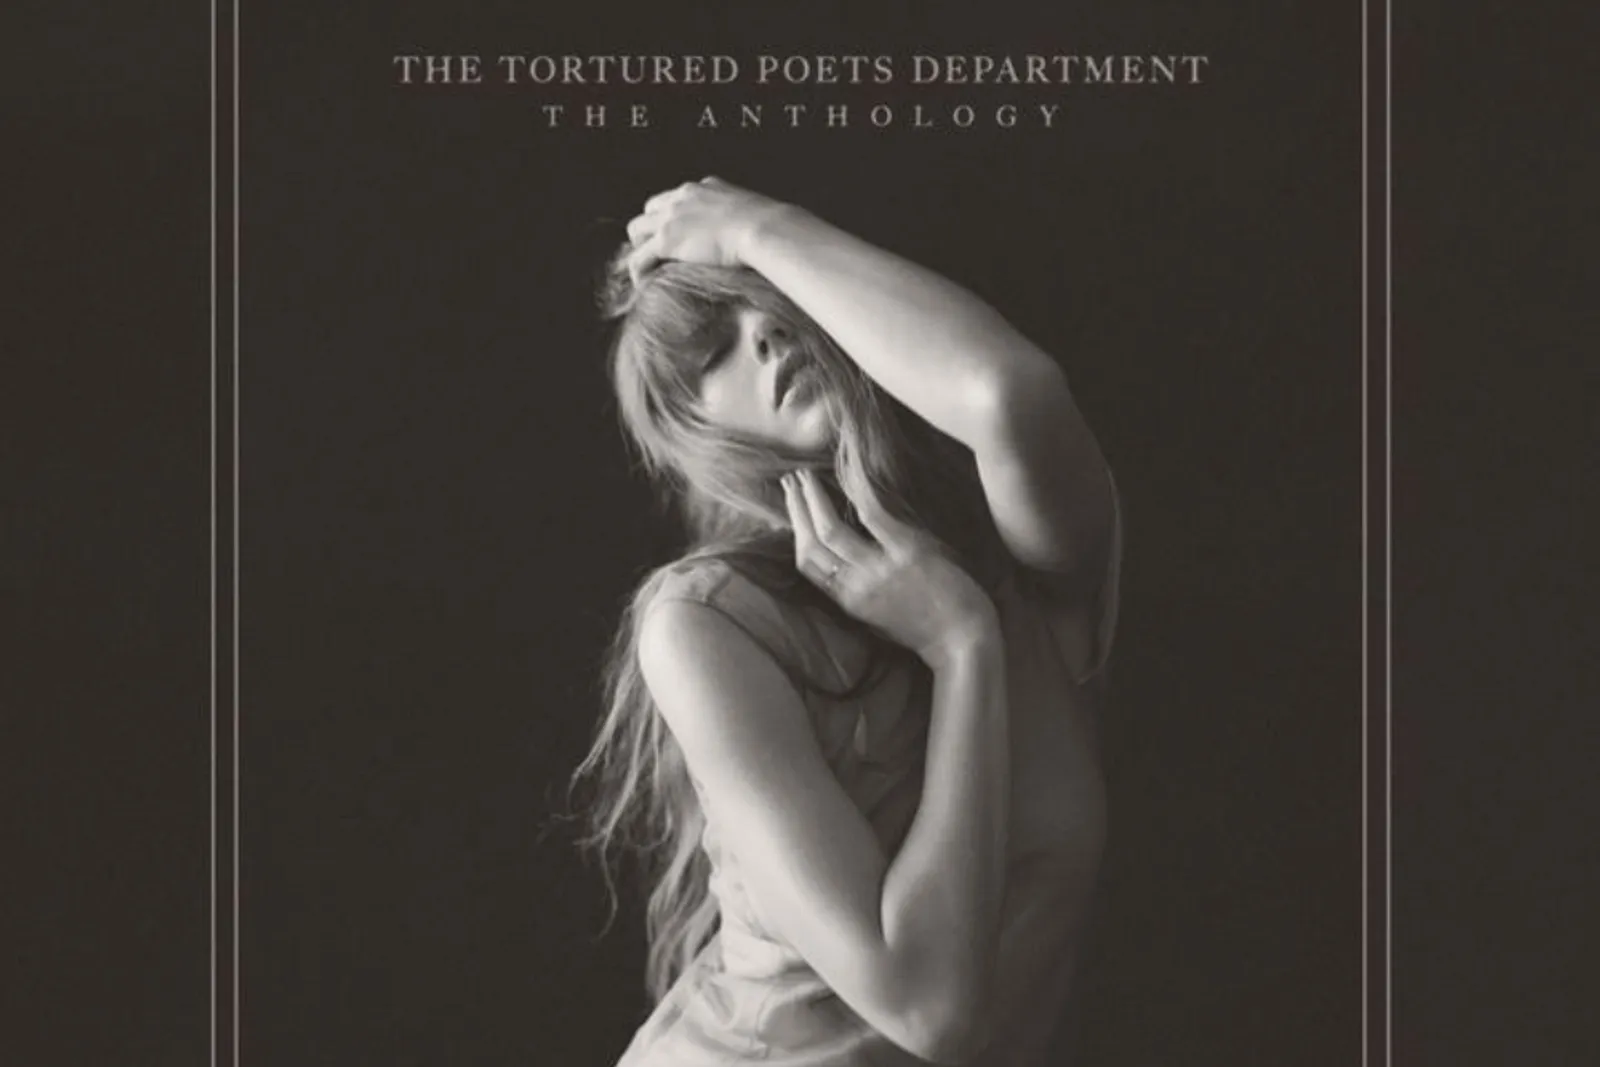 8 Fakta Album 'The Tortured Poets Department' Oleh Taylor Swift